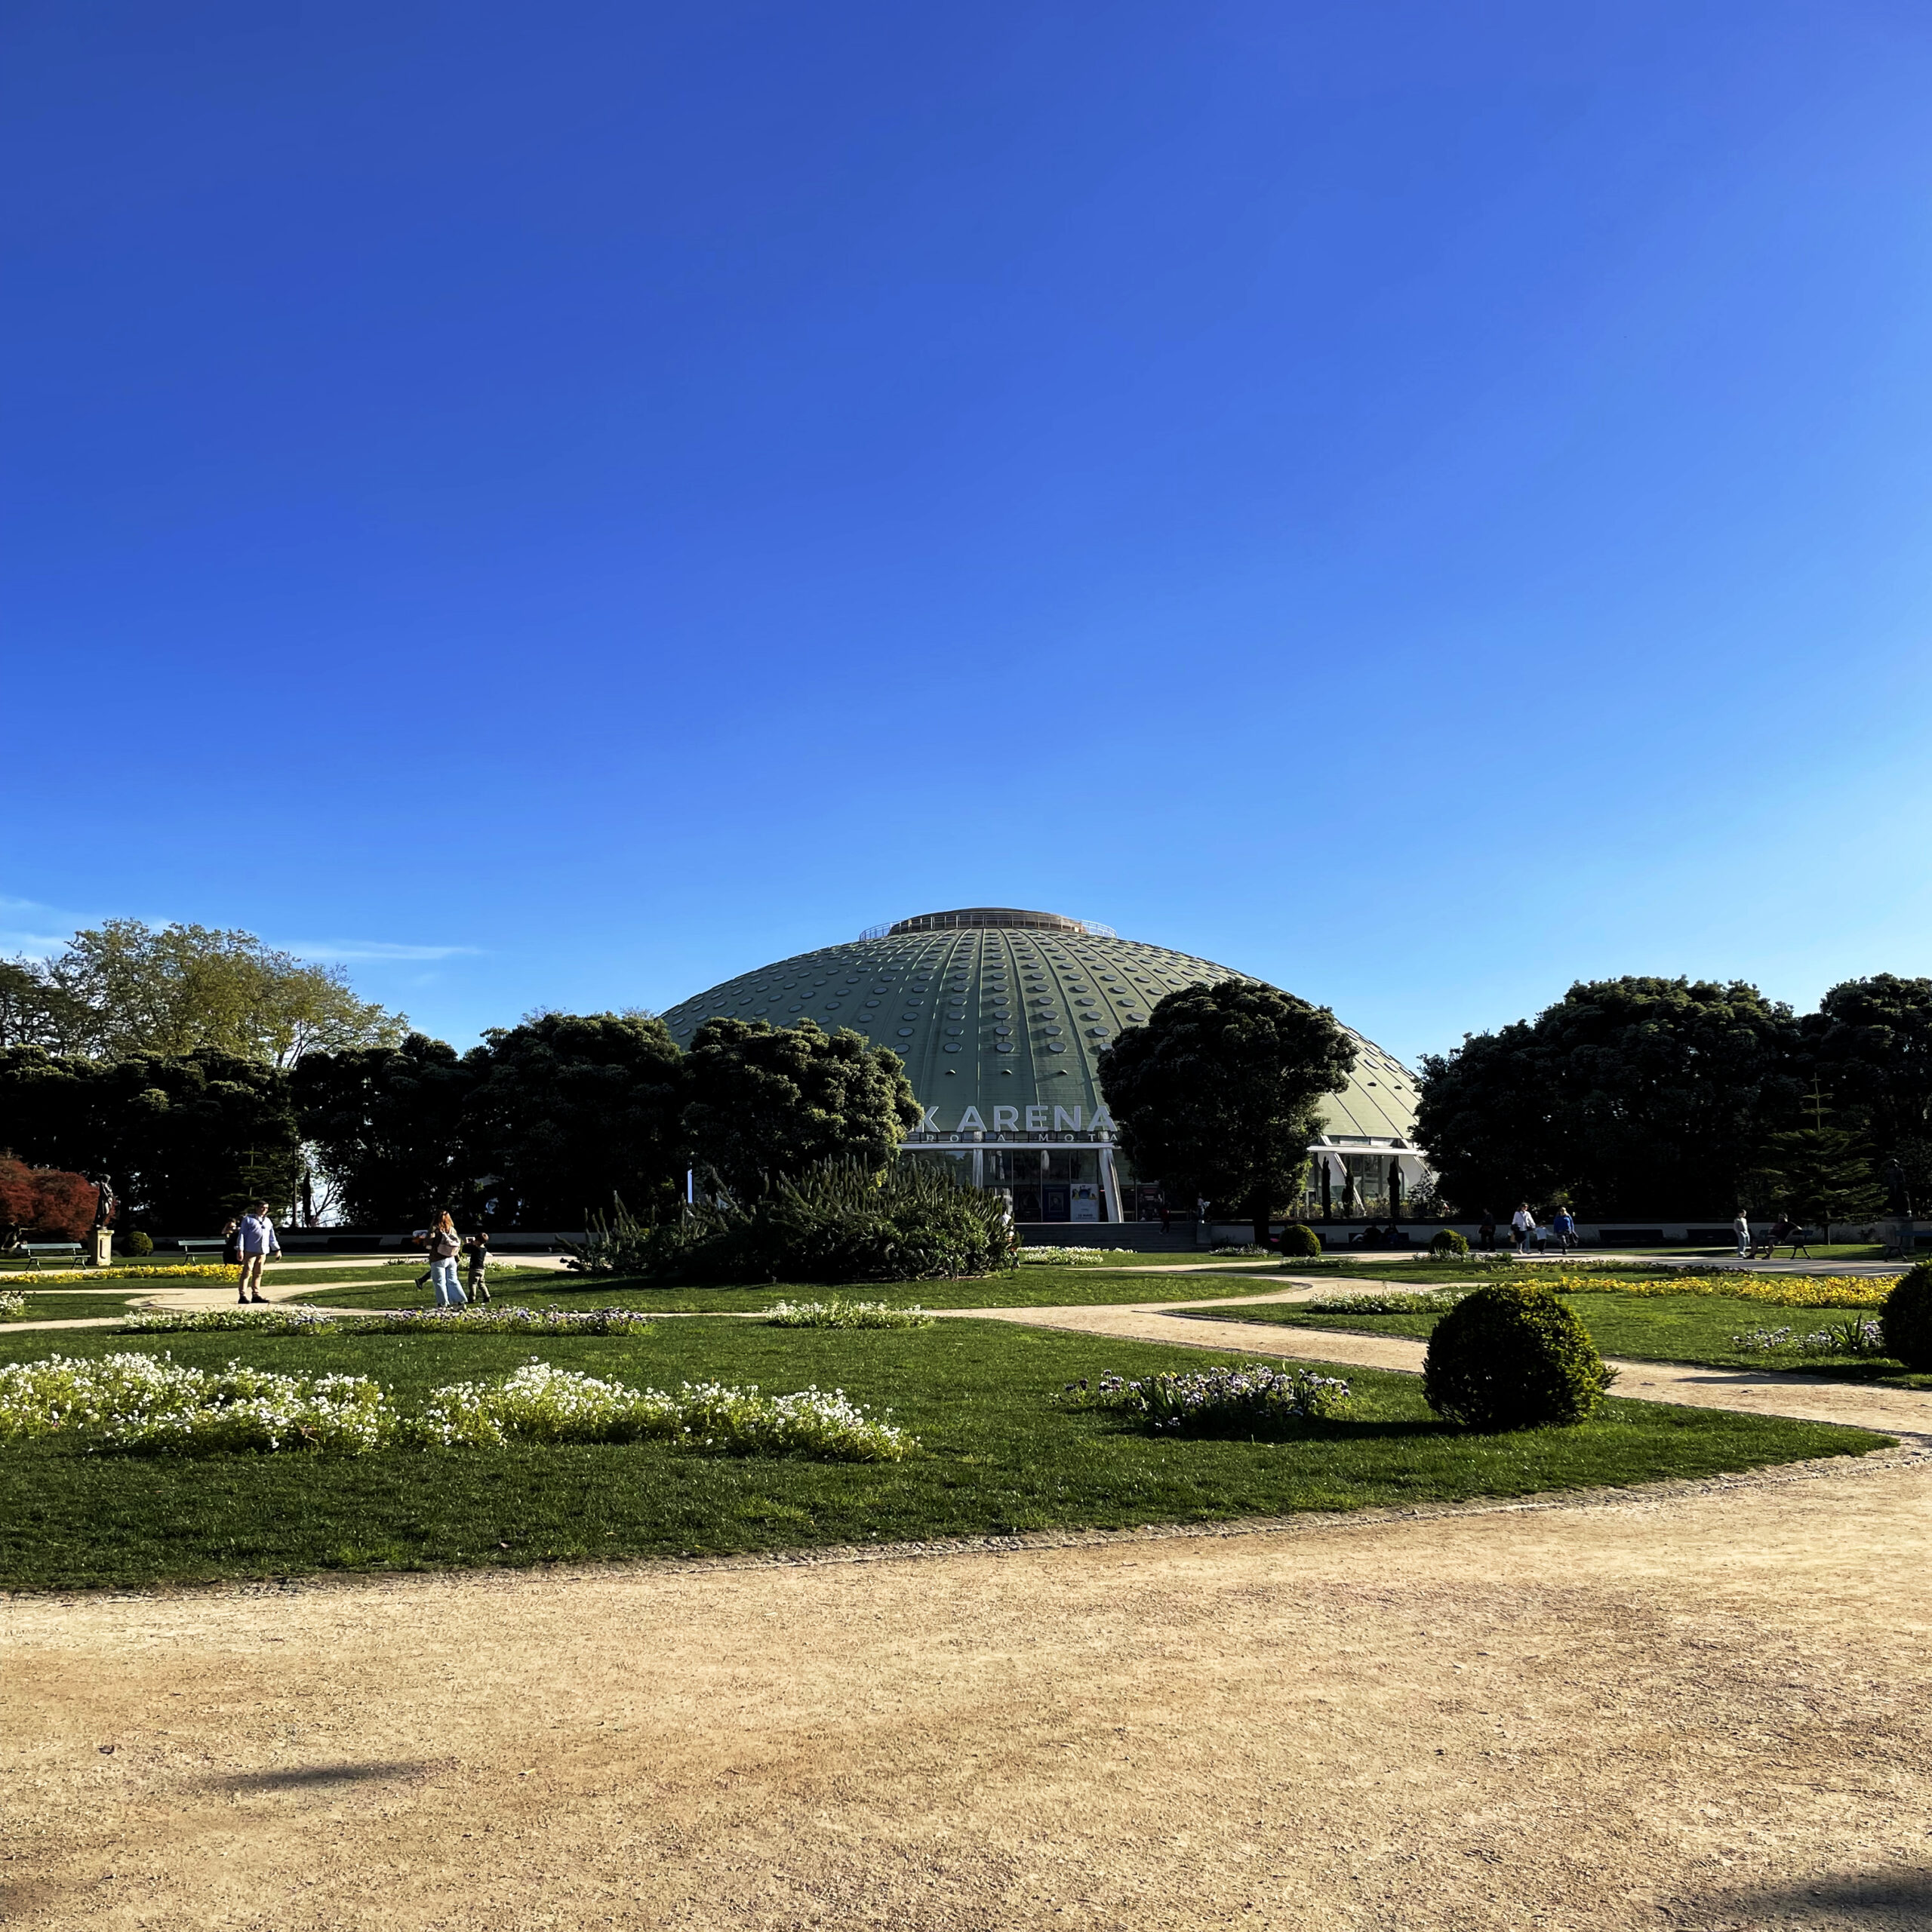 Idyllic Gardens in Porto – Crystal Palace Gardens